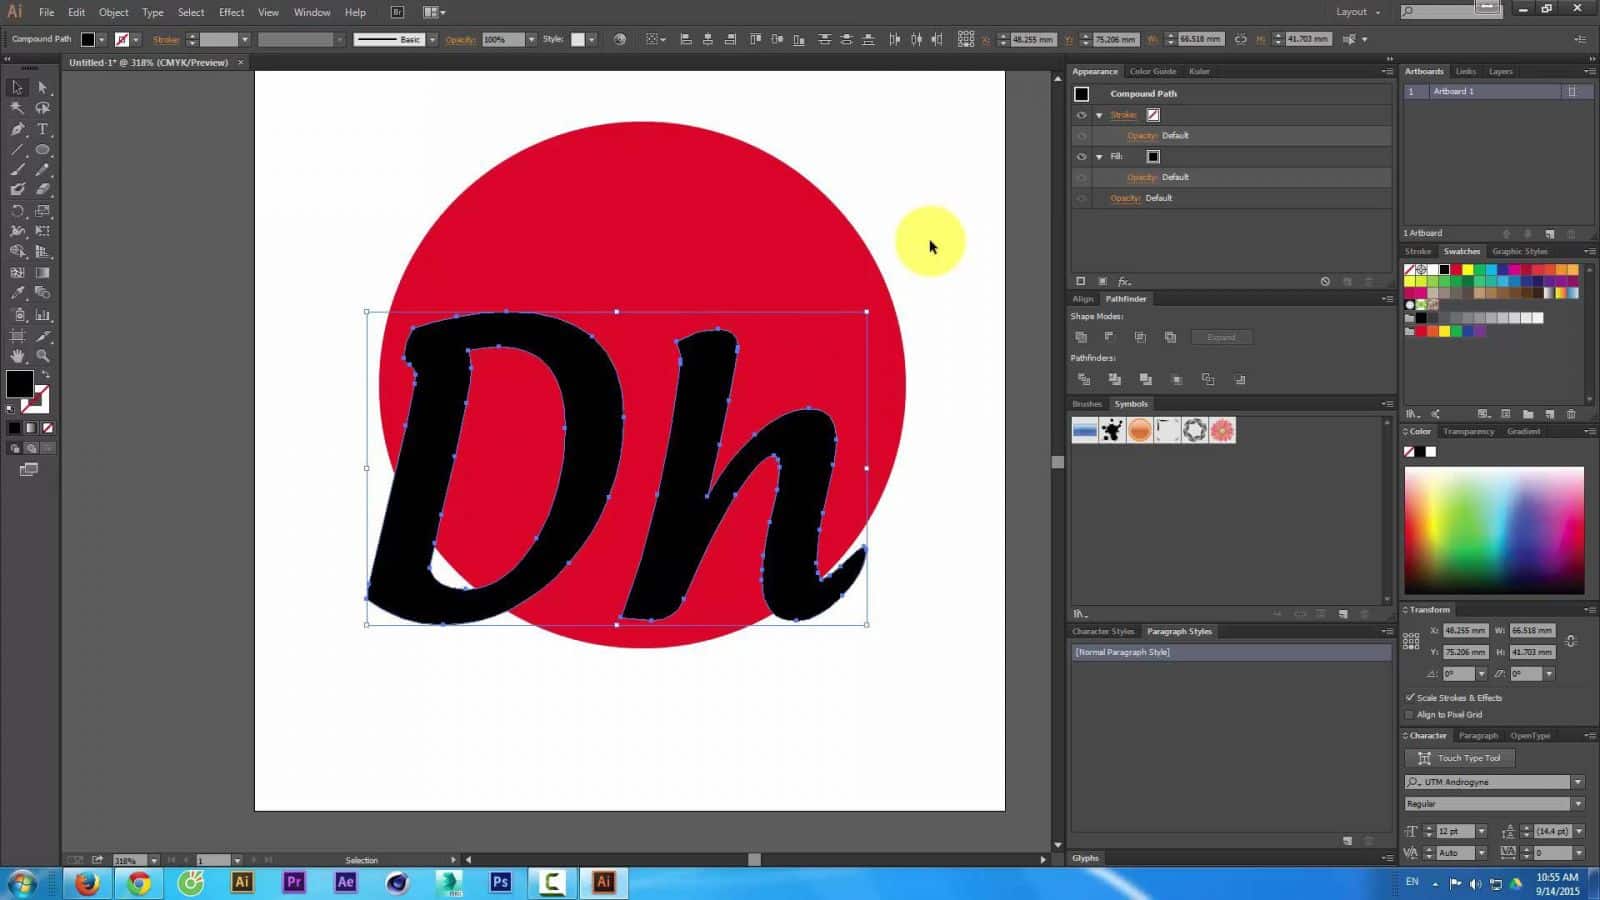 Hướng dẫn thiết kế logo bằng Illustrator  Downloadvn